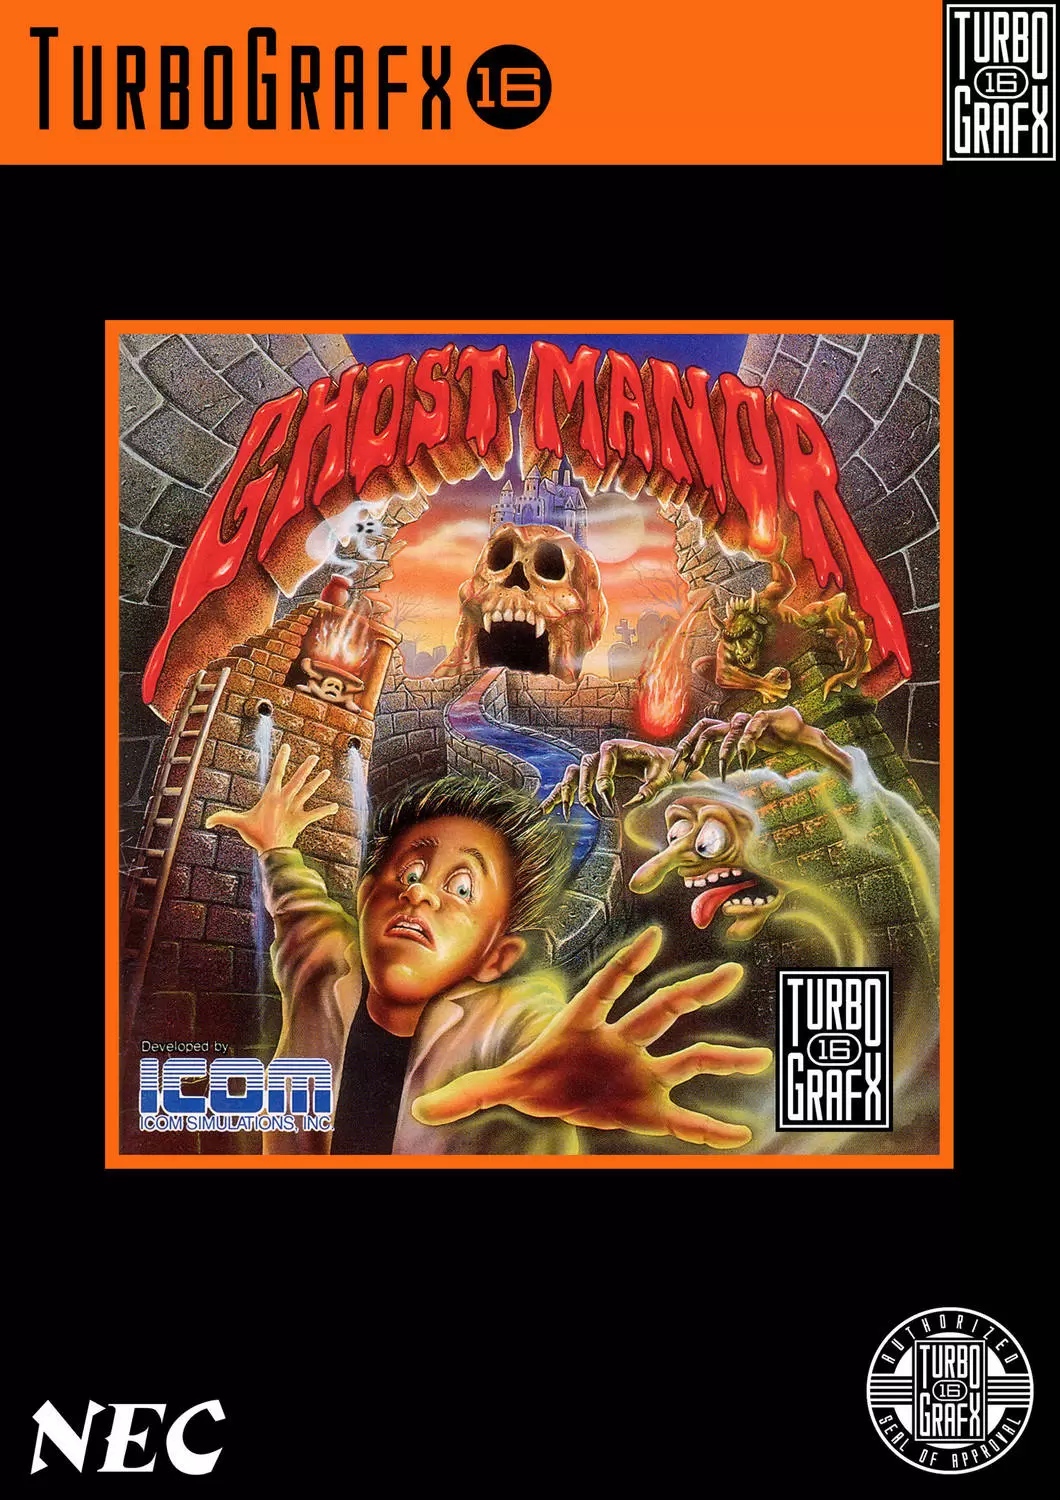 Turbo Grafx 16 (PC Engine) - Ghost Manor